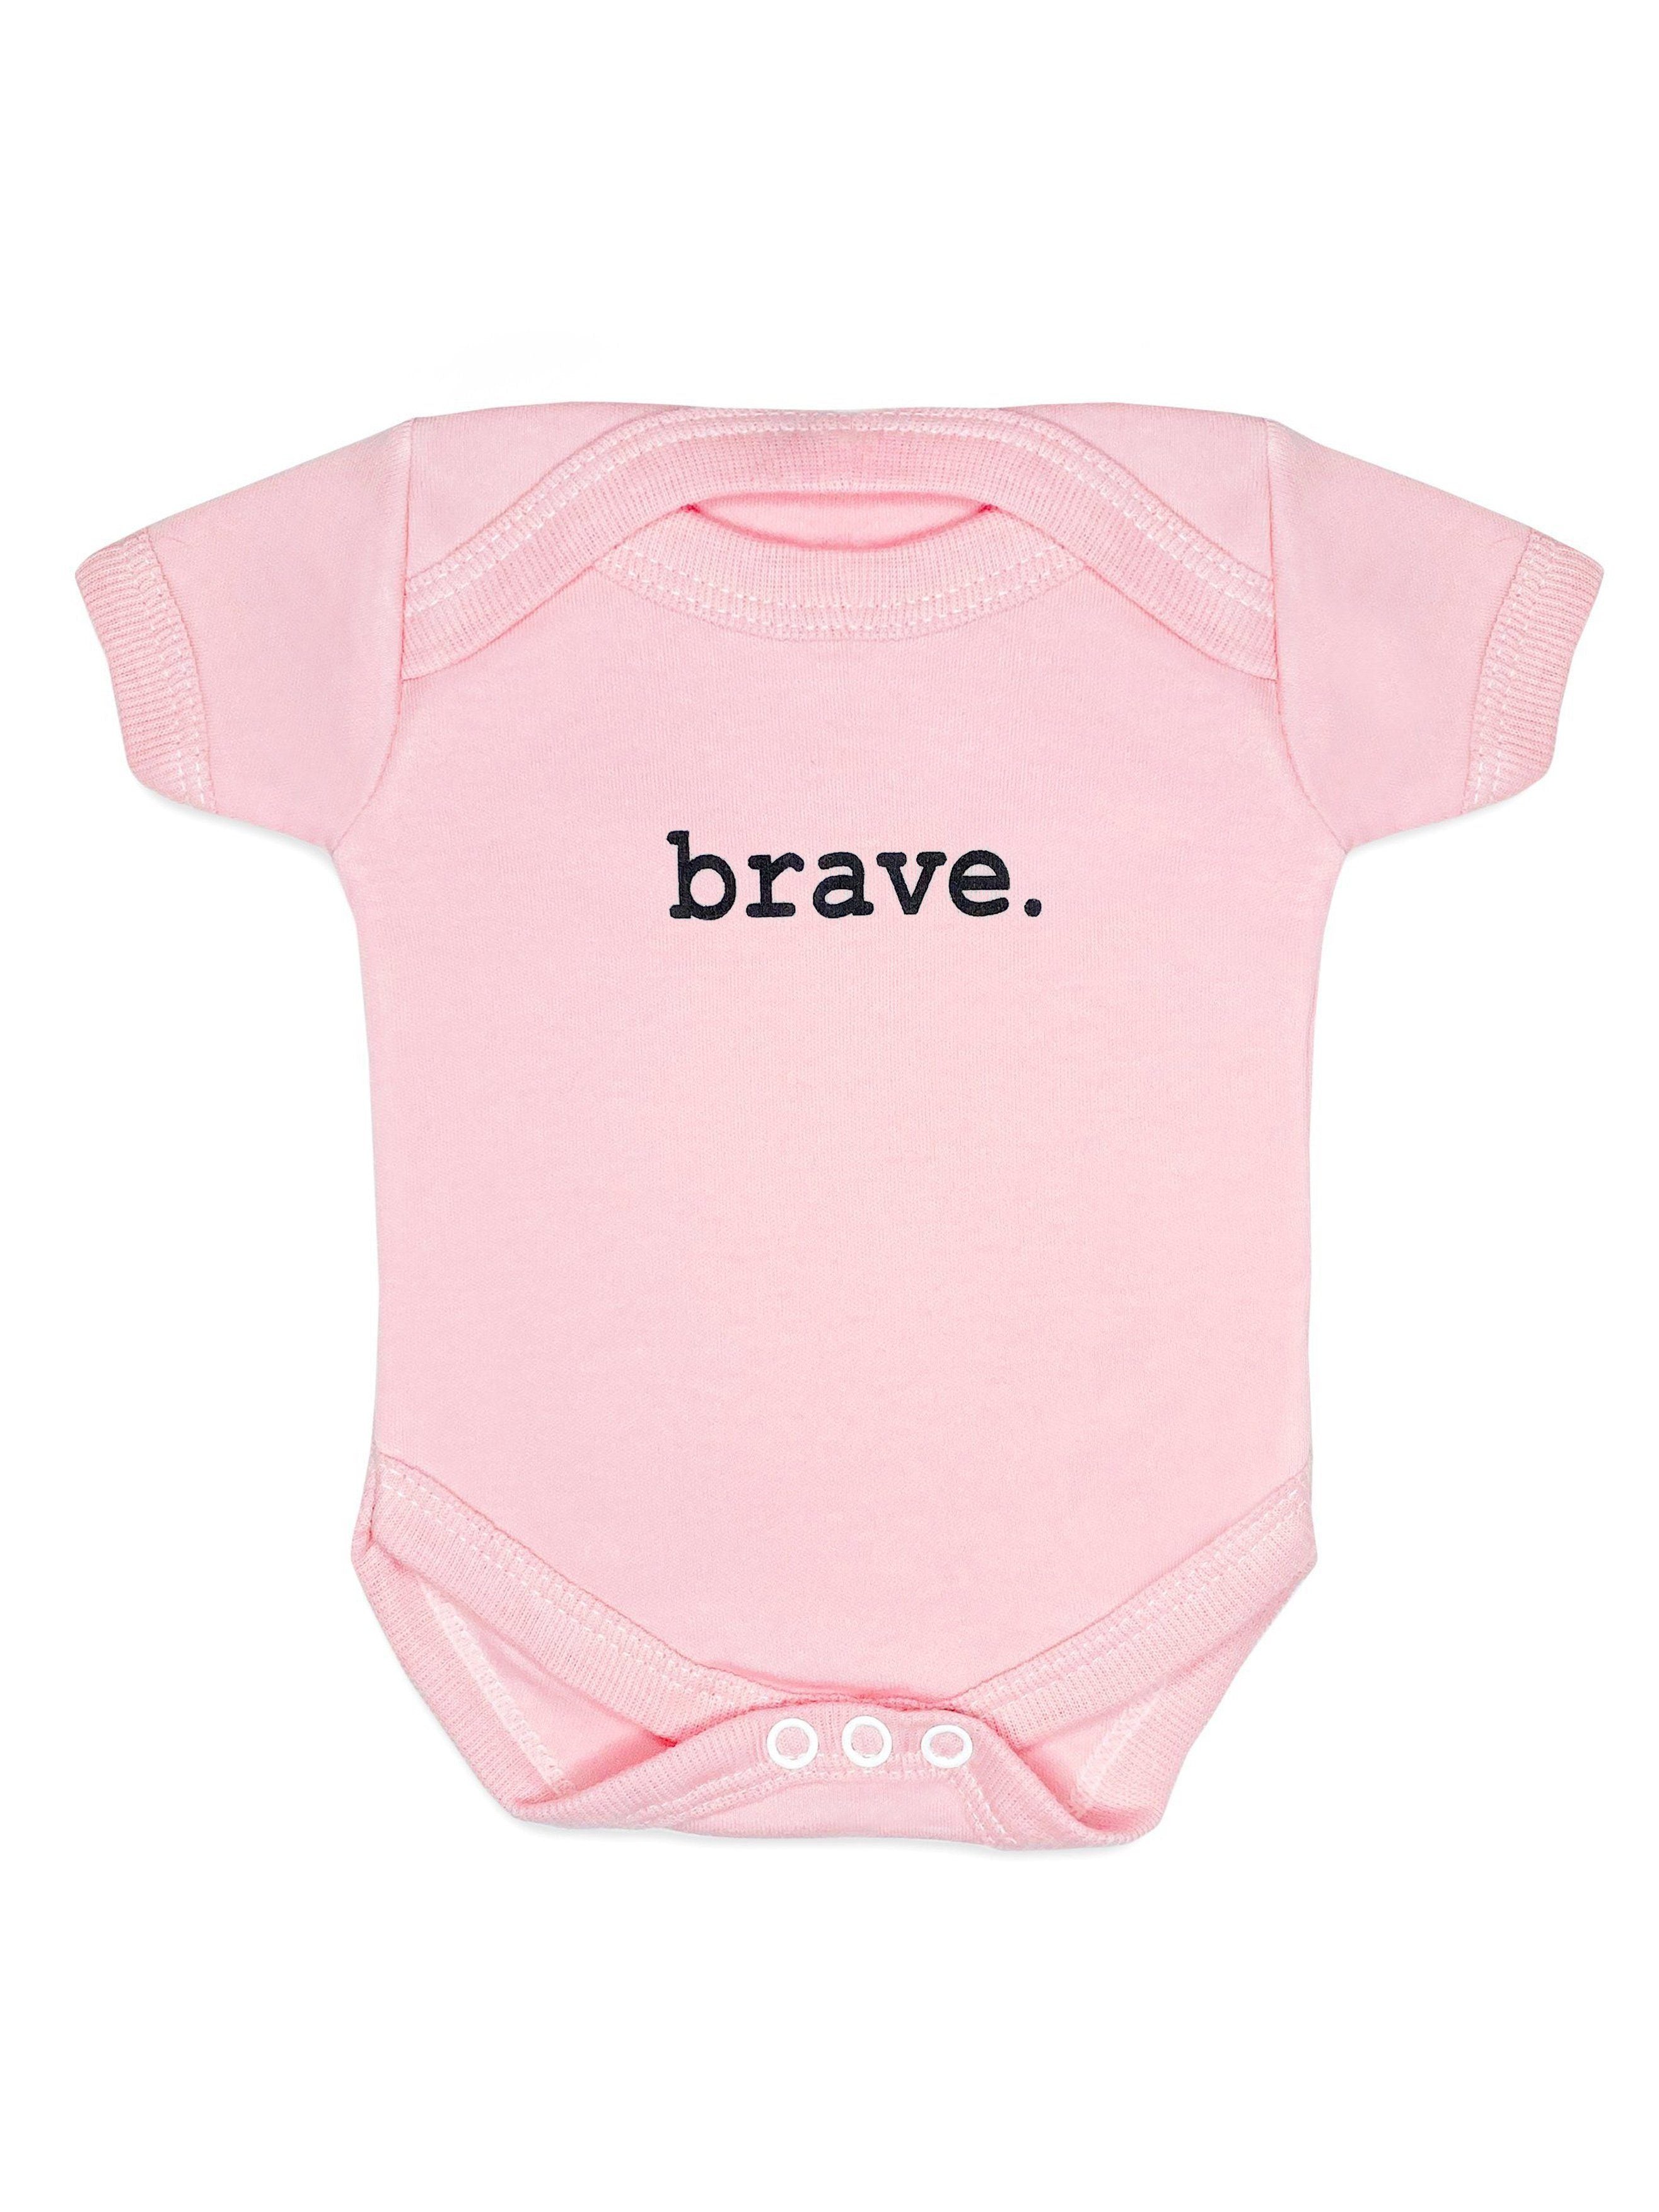 "Brave" Bodysuit - Pink Bodysuit / Vest Little Mouse Baby Clothing & Gifts 